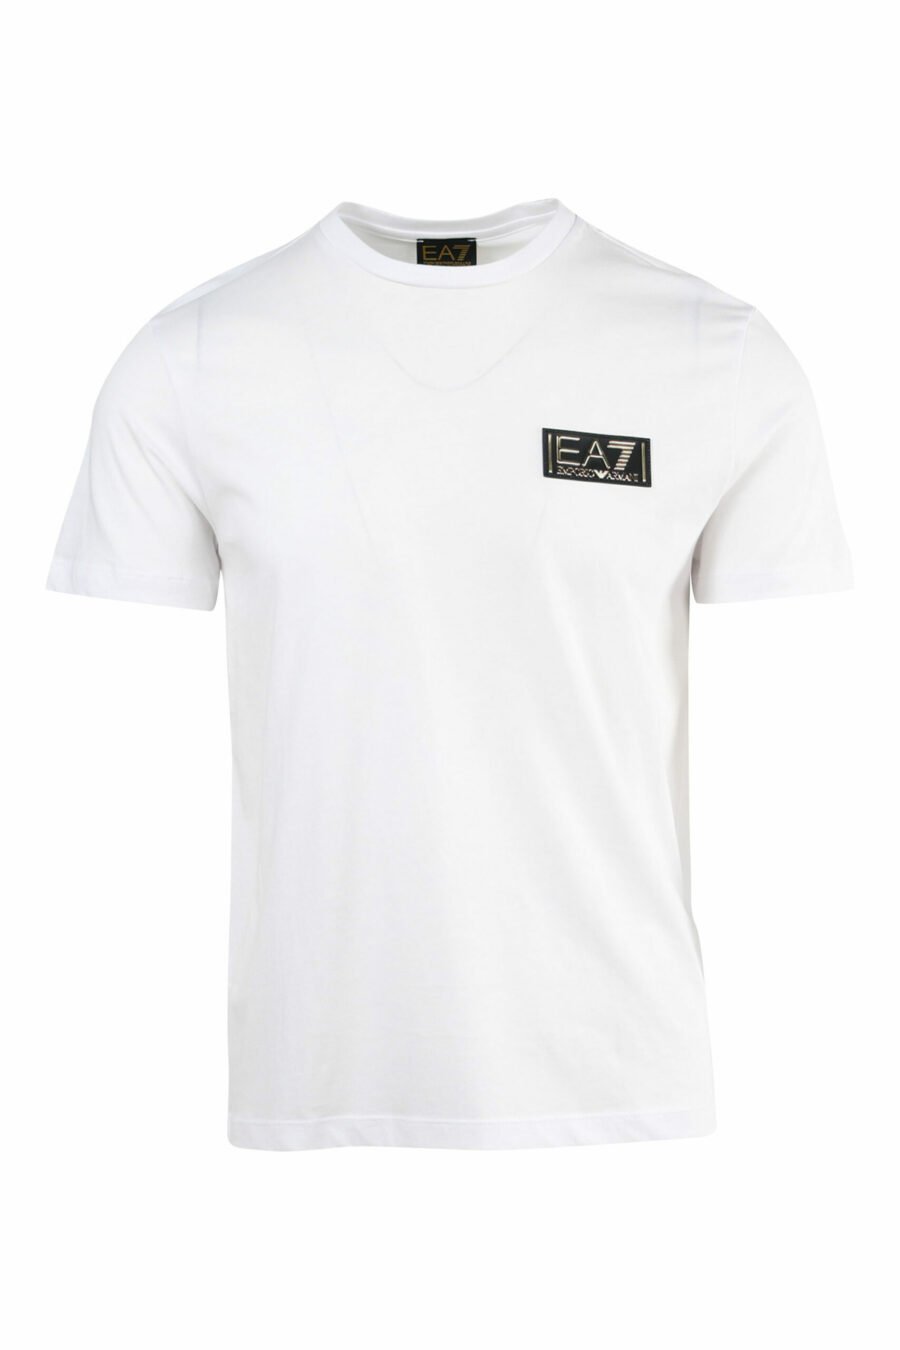 Camiseta blanca con minilogo etiqueta "lux identity" dorado - 8057767515720 1 scaled